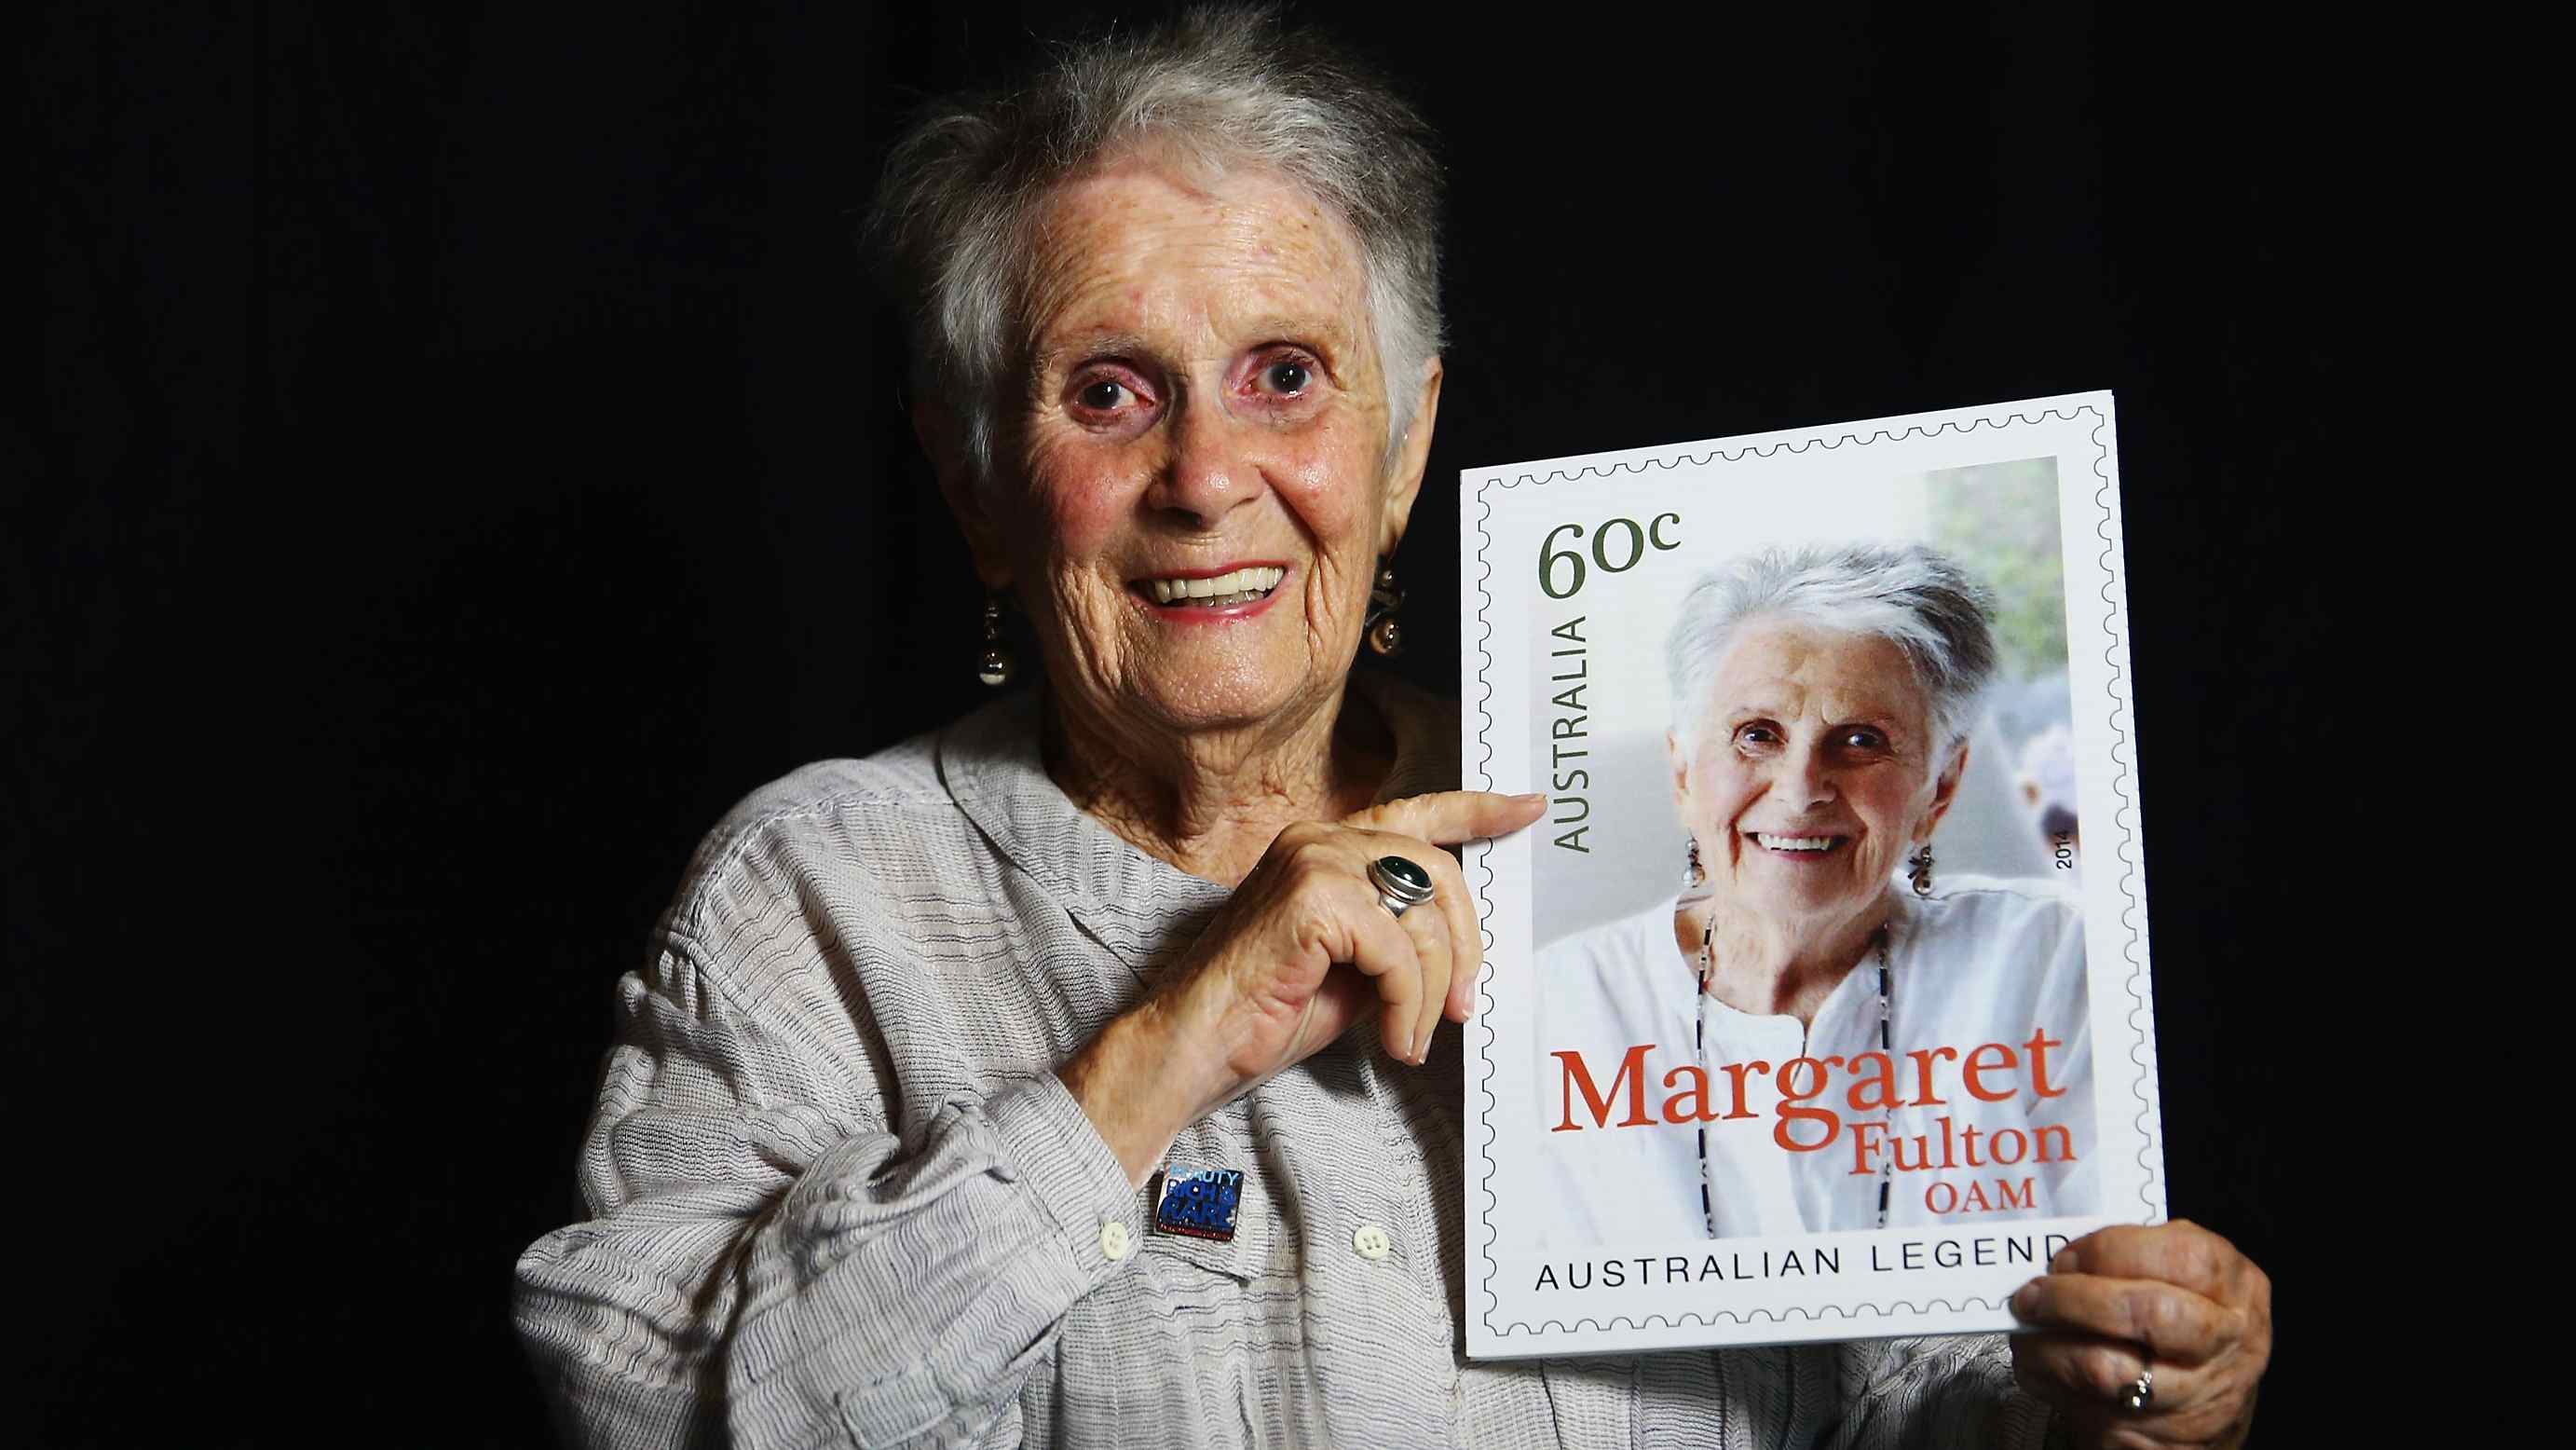 Sad news: Celebrity chef and Australian icon Margaret Fulton passes away at 94